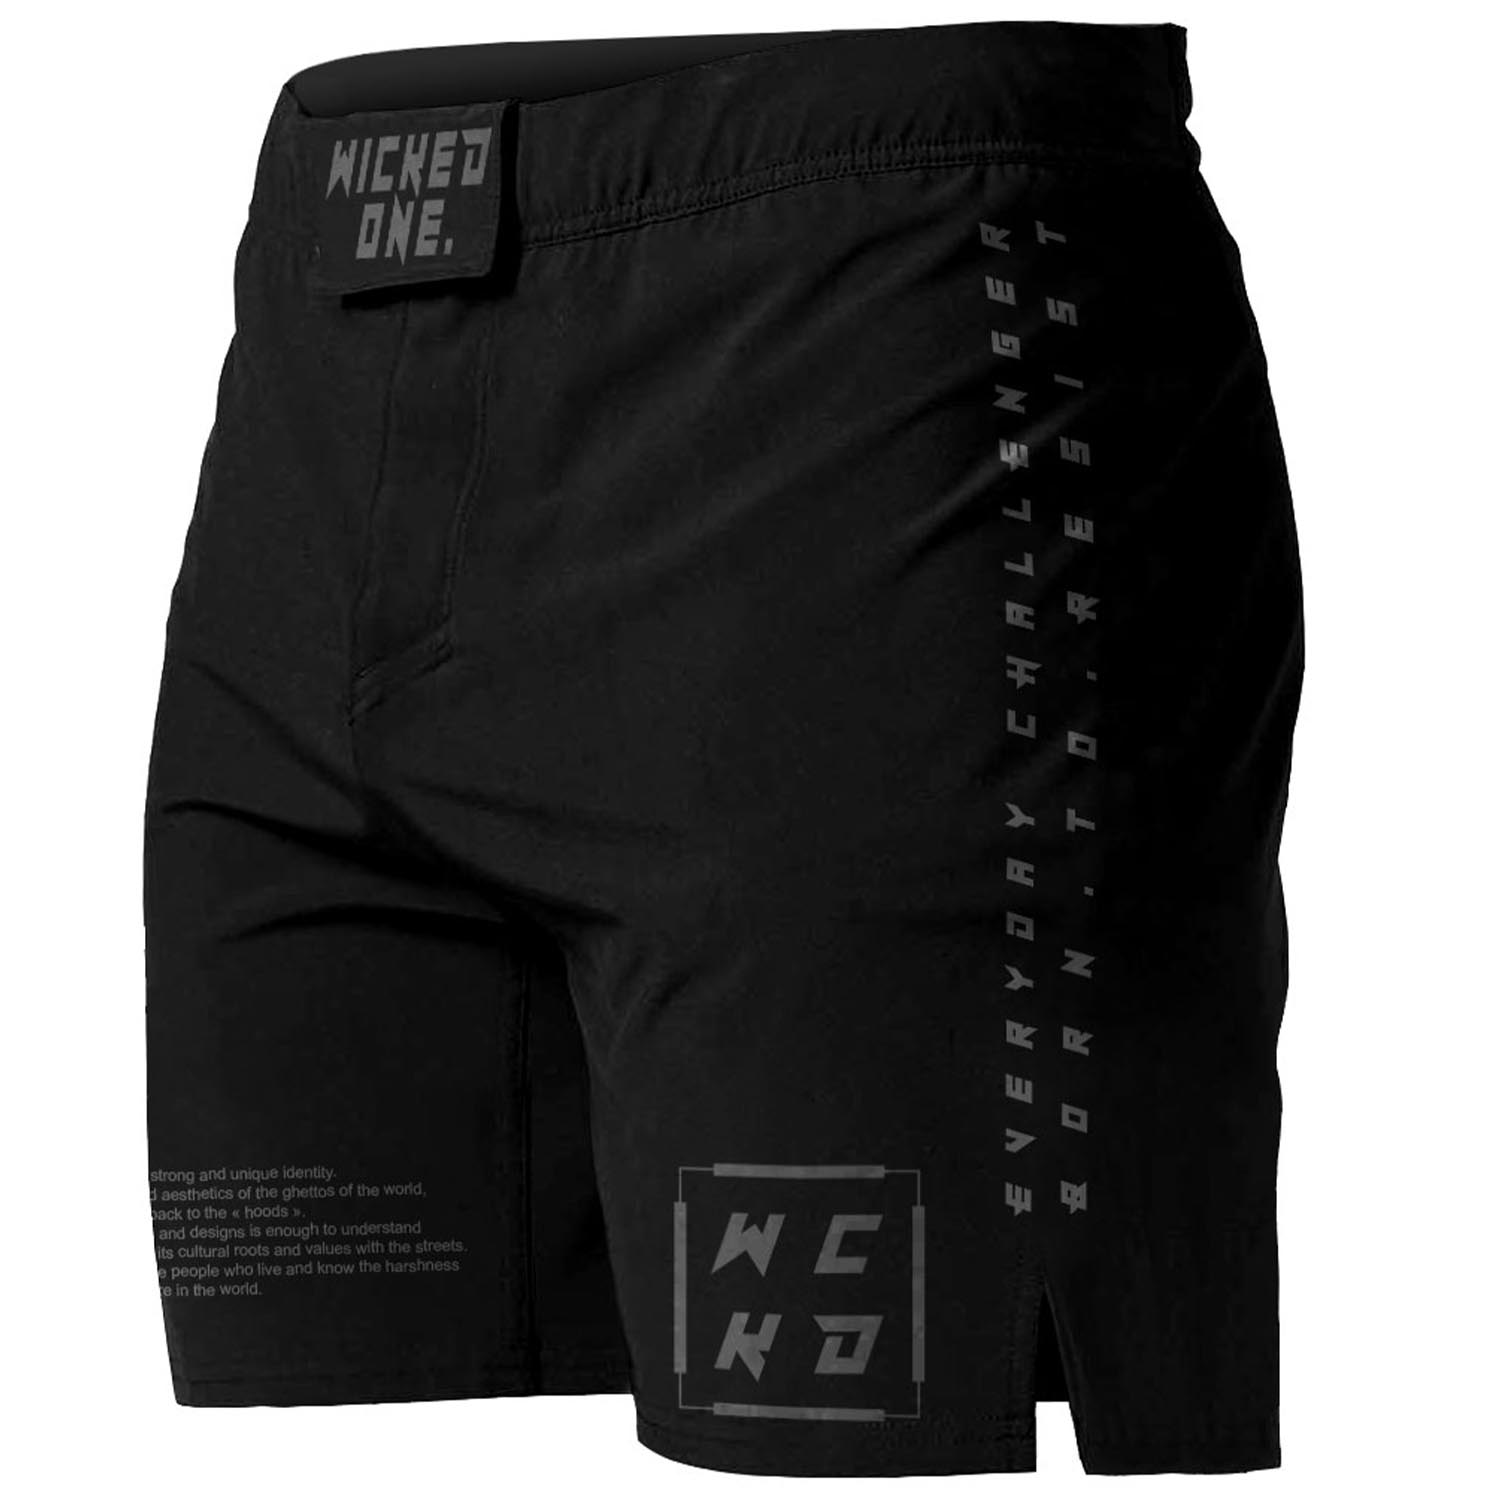 Wicked One Training Shorts, Score, schwarz, XL